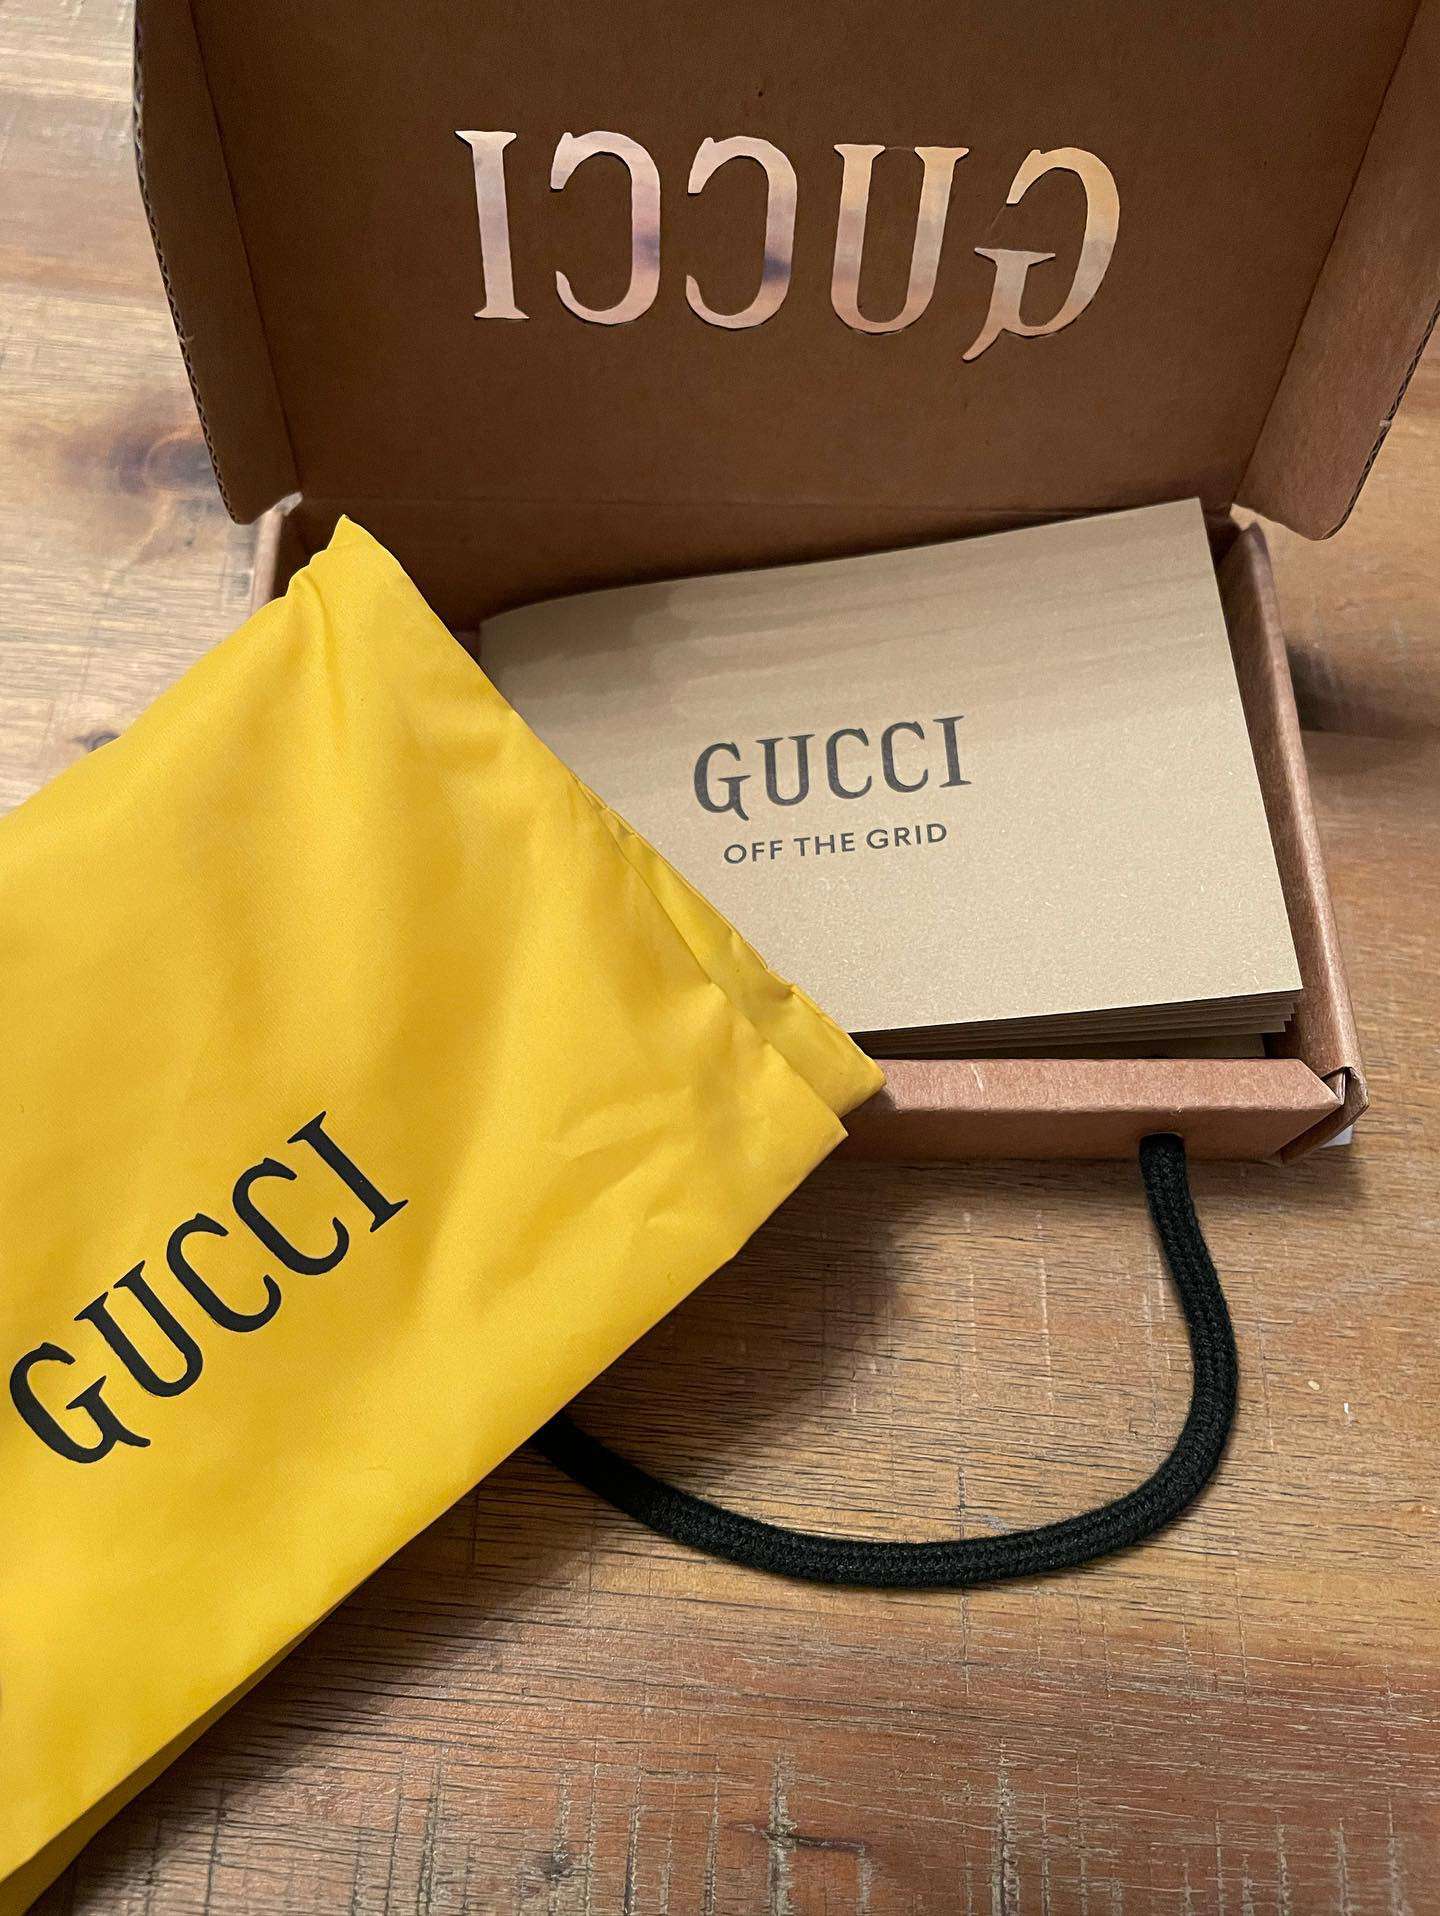 Gucci cardholder